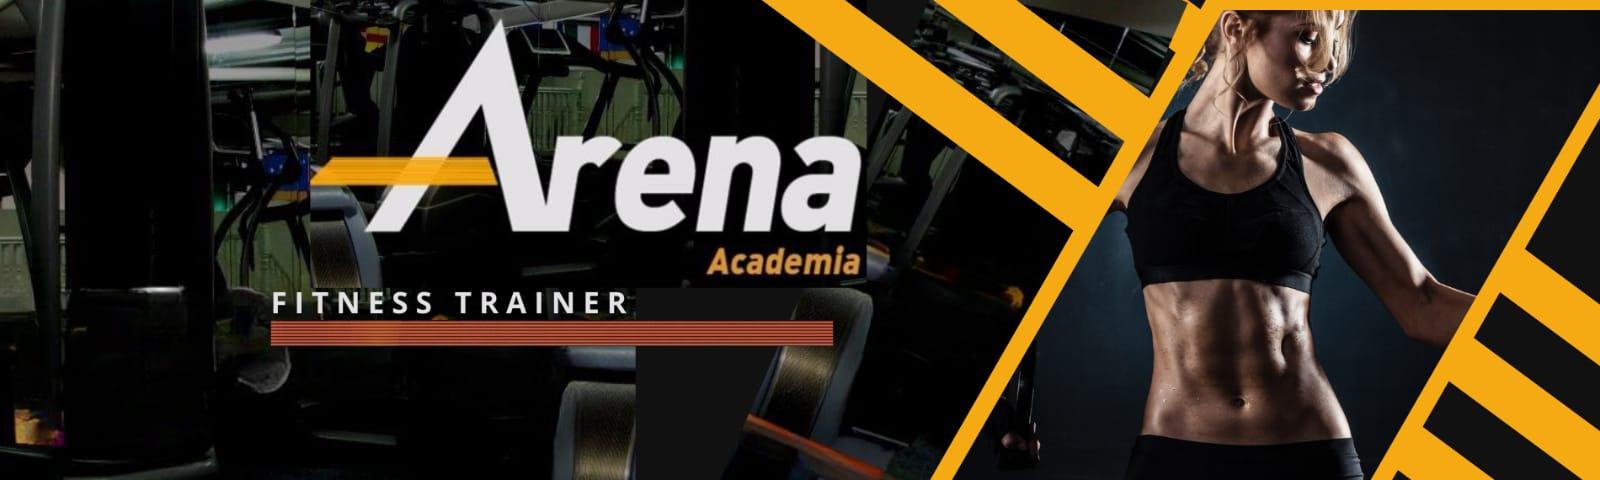 Arena Academia